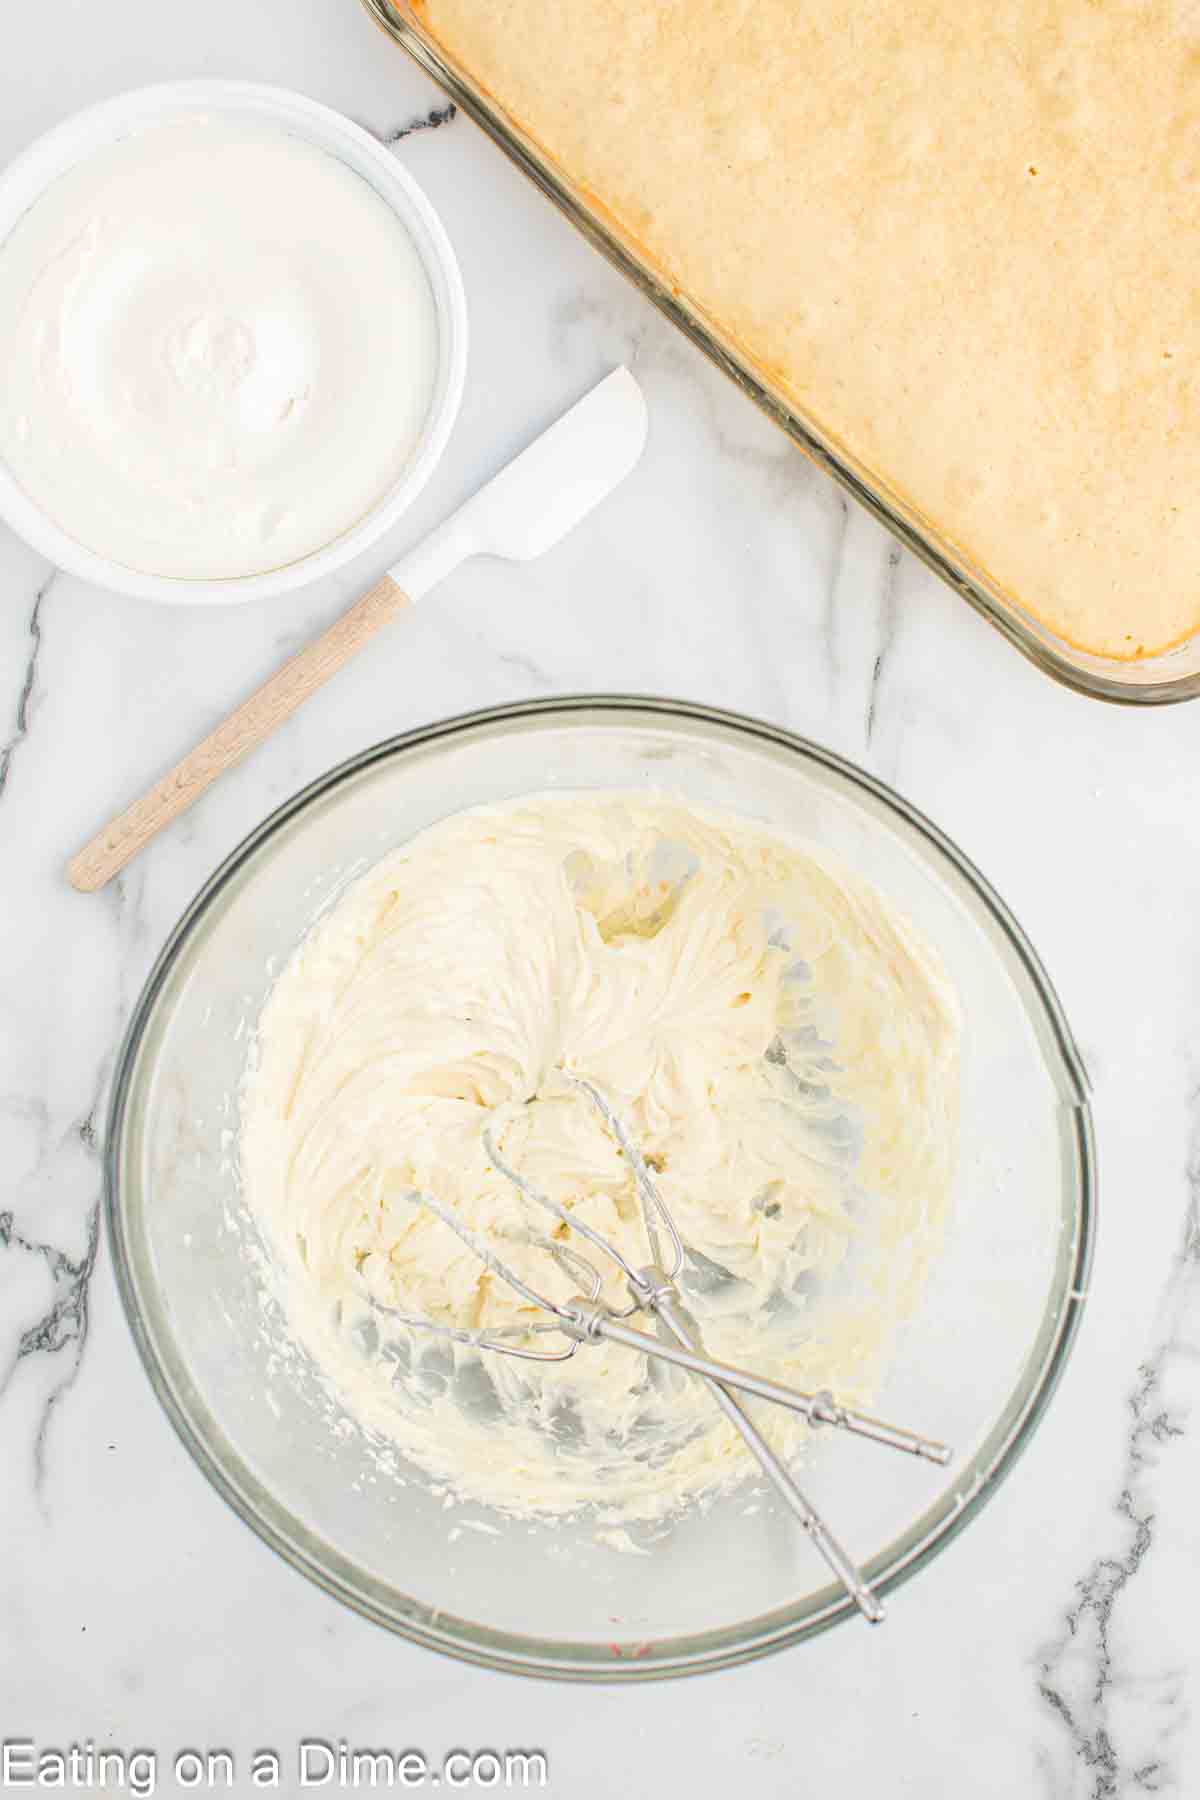 Beating cream cheese, powdered sugar, and vanilla in a bowl